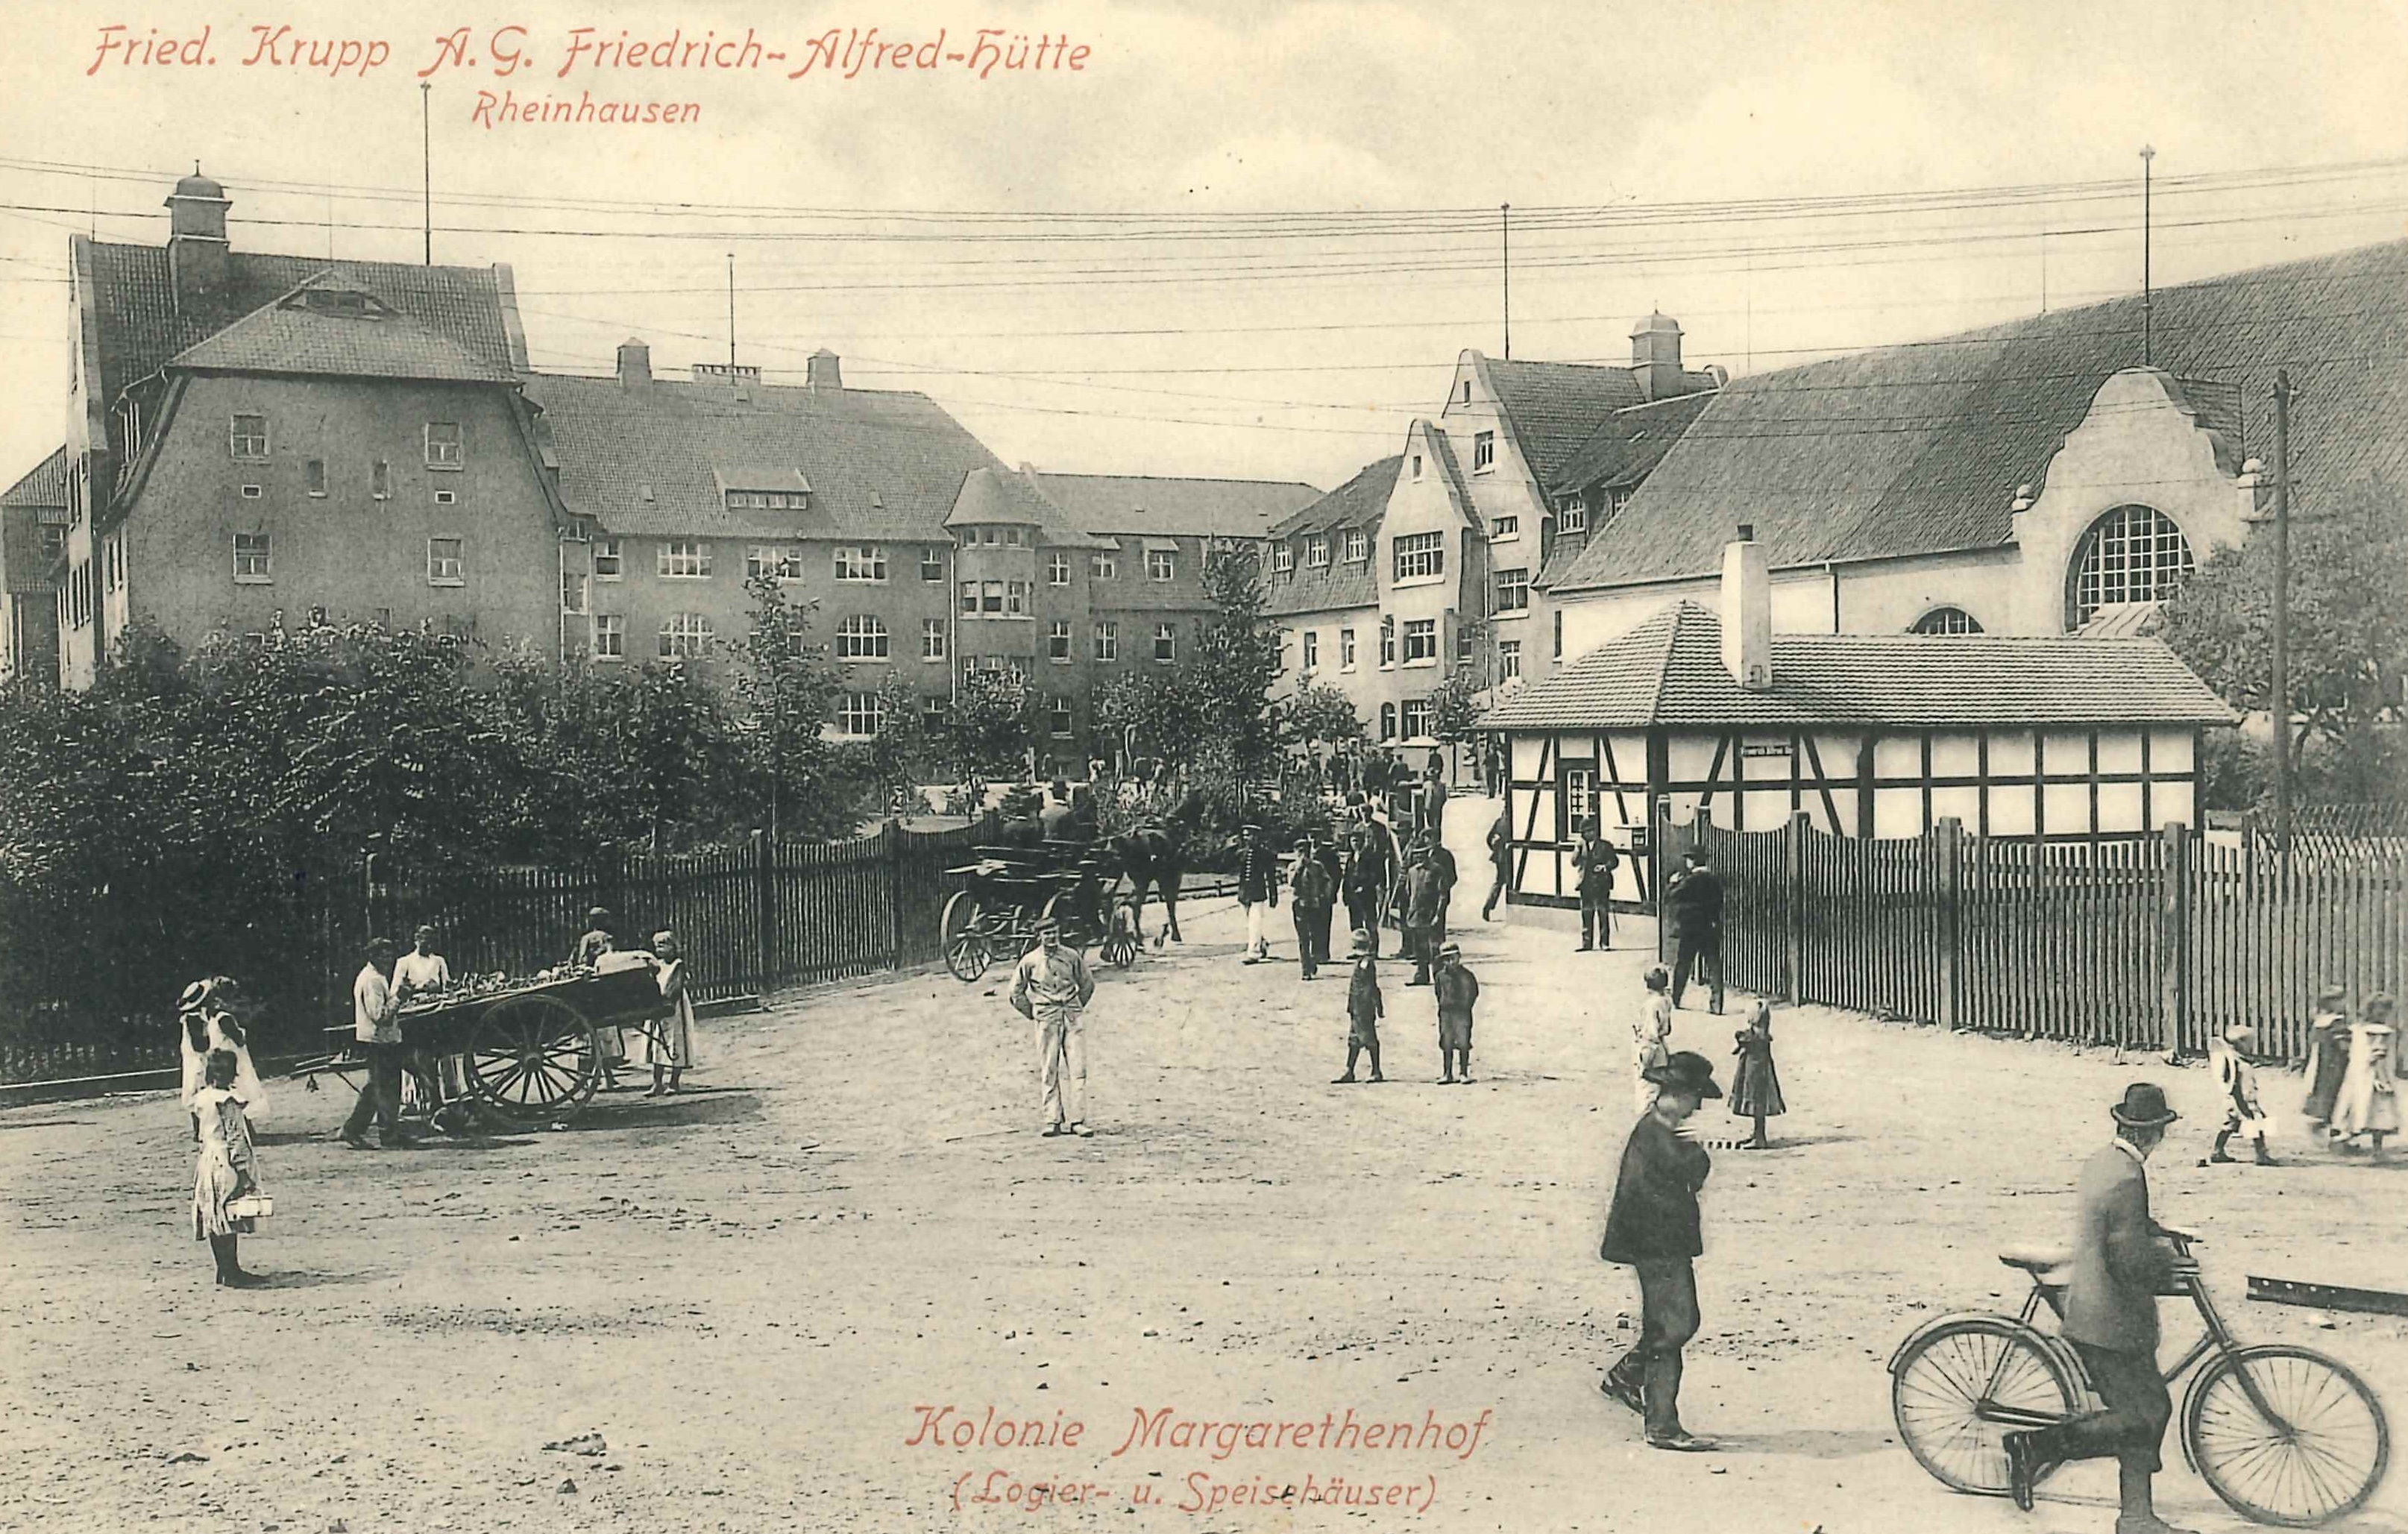 Postkarte, "Kolonie Margarethenhof", Friedrich-Alfred-Hütte Rheinhausen (REM CC BY-NC-SA)